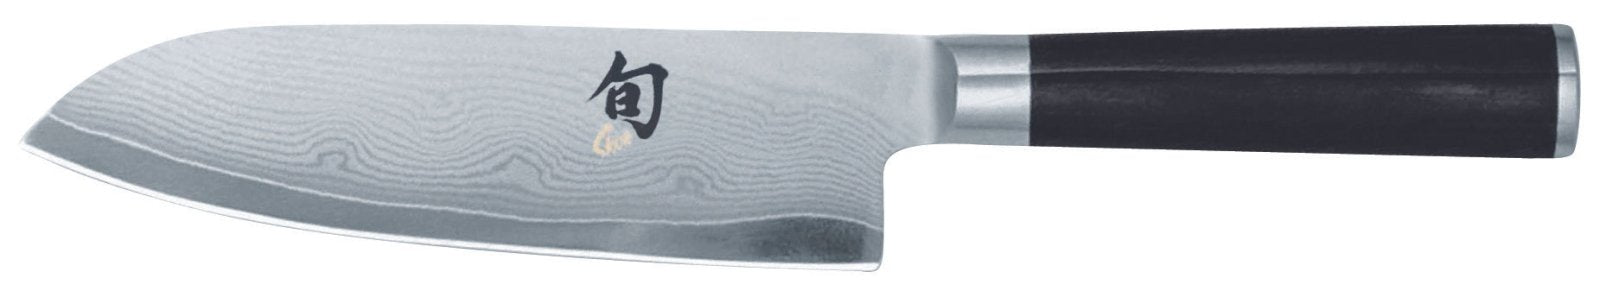 Kai Shun 18cm Santoku Knife Left Handed - KAI-DM-0702L - The Cotswold Knife Company